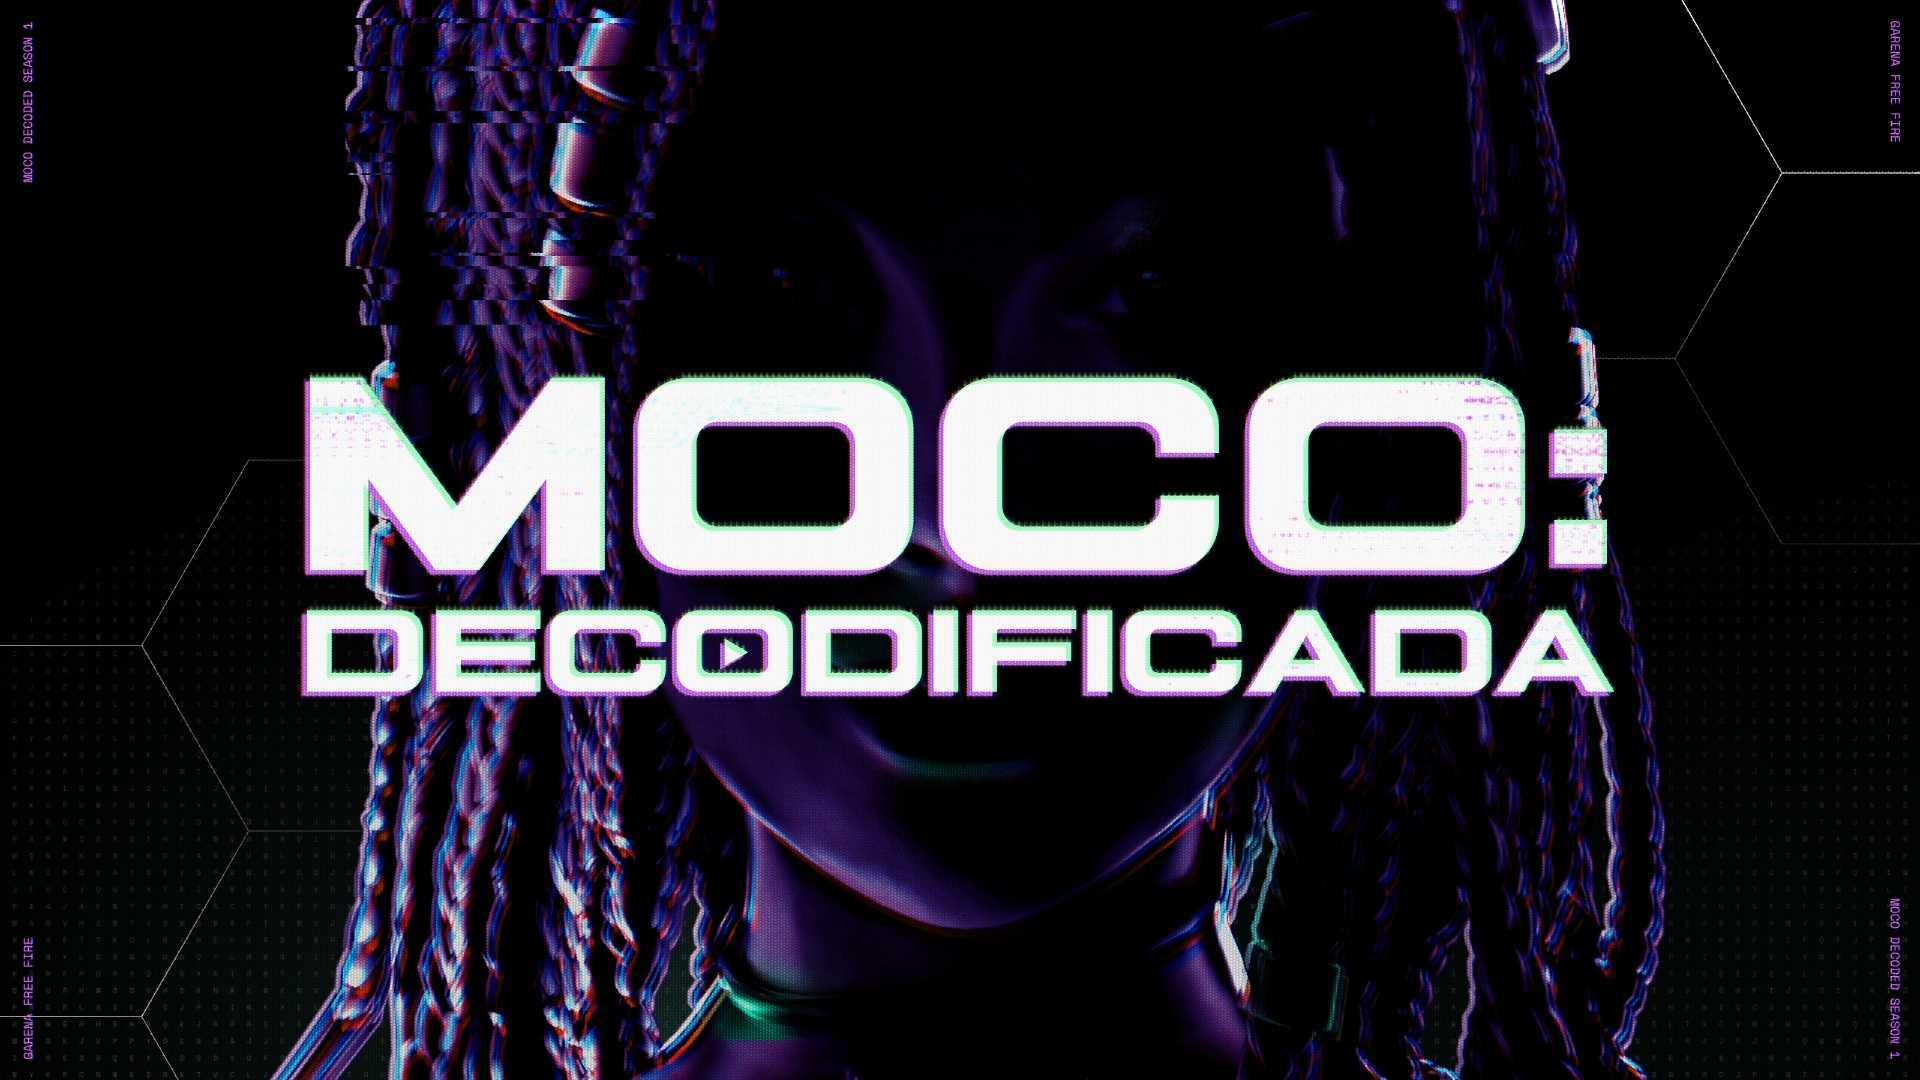 MOCO DECODIFICADA Opening